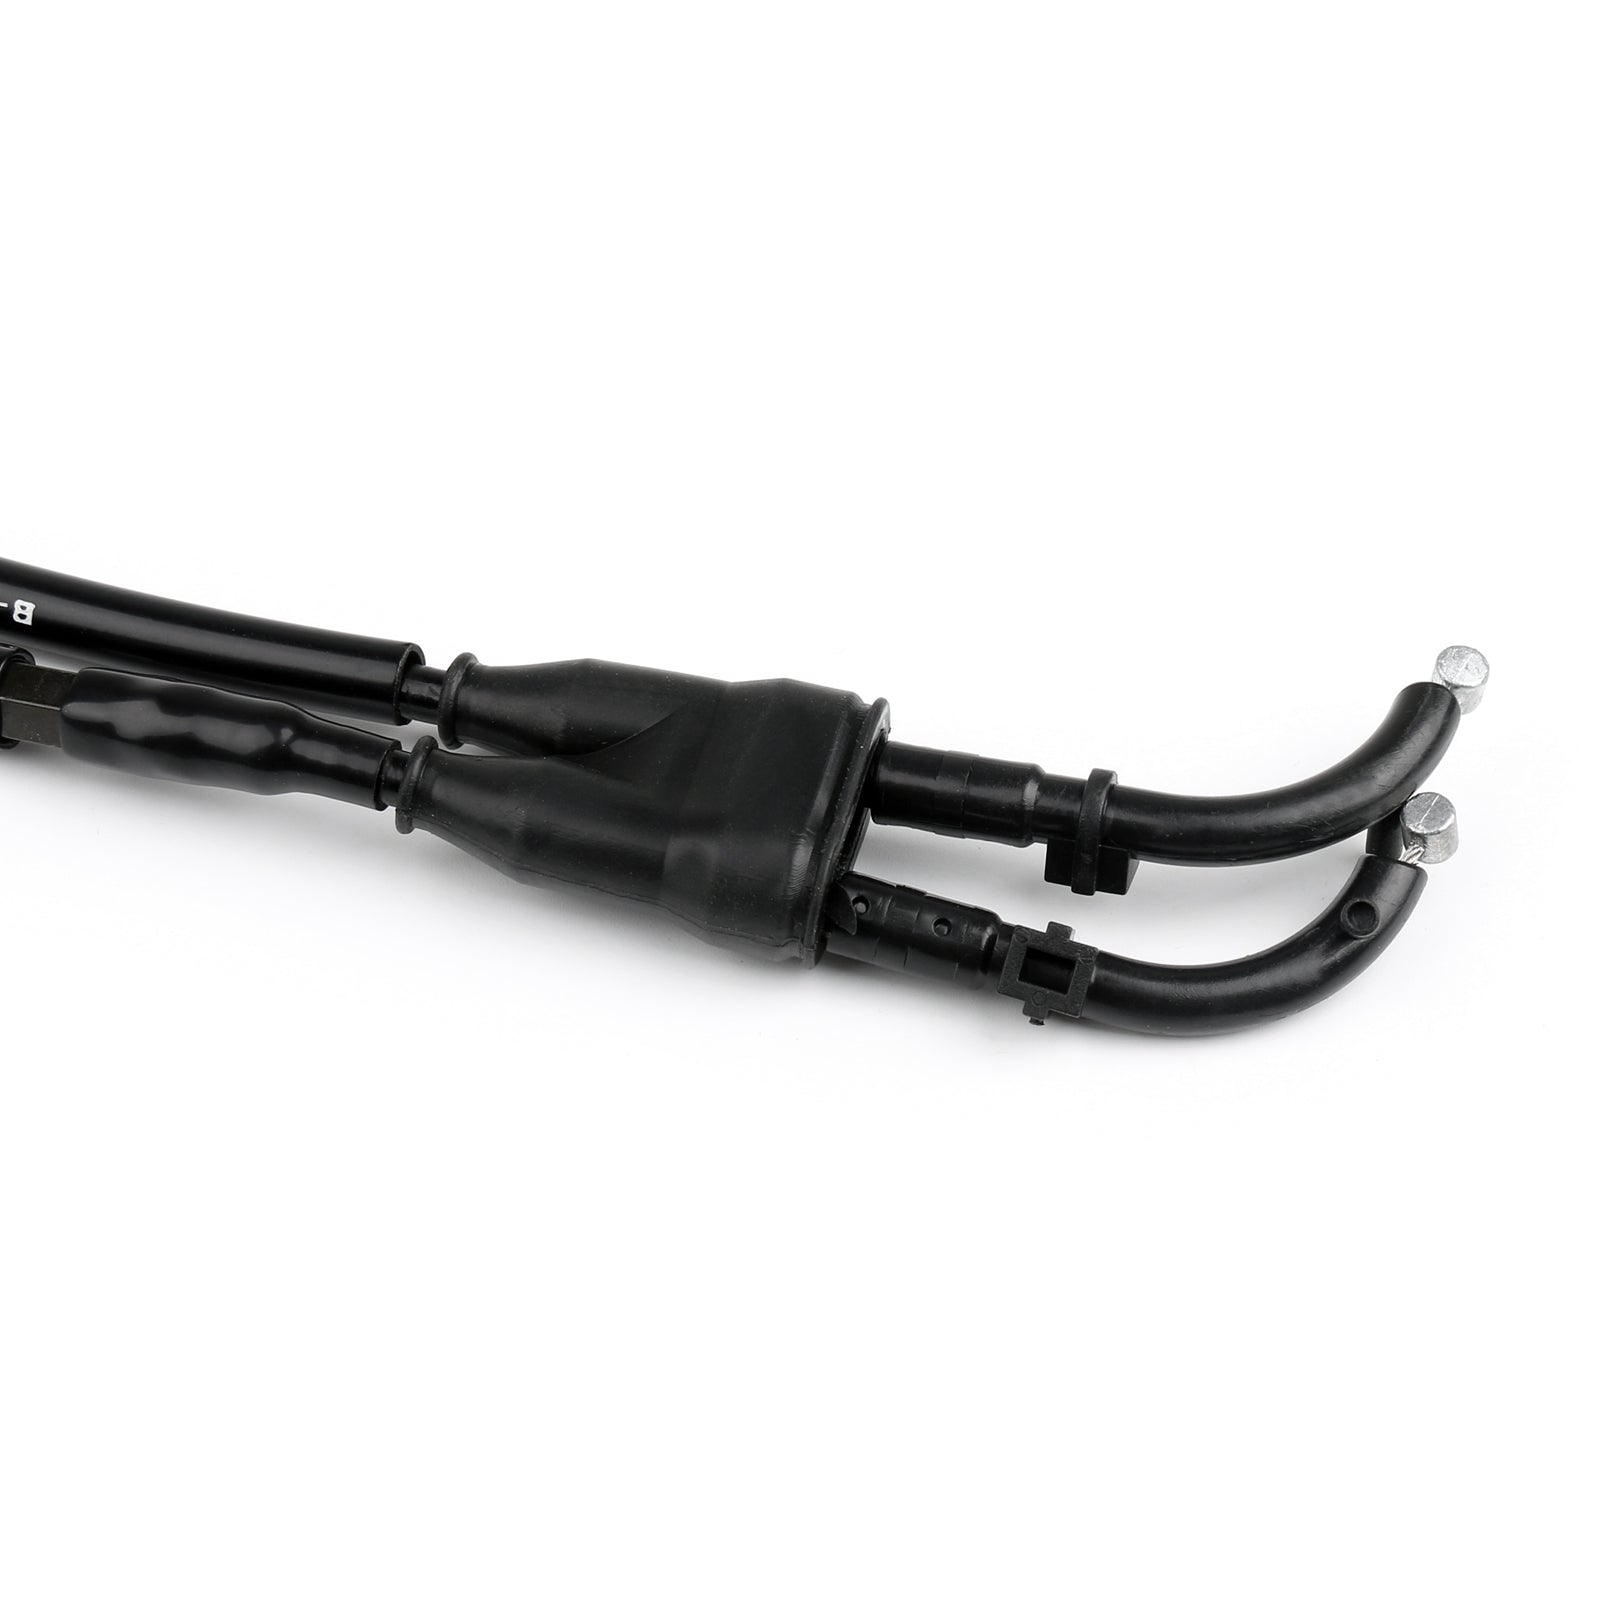 Cable de acelerador de gas de línea alámbrica Push/Pull para Yamaha YZF R1 YZF-R1 2007-2008 genérico